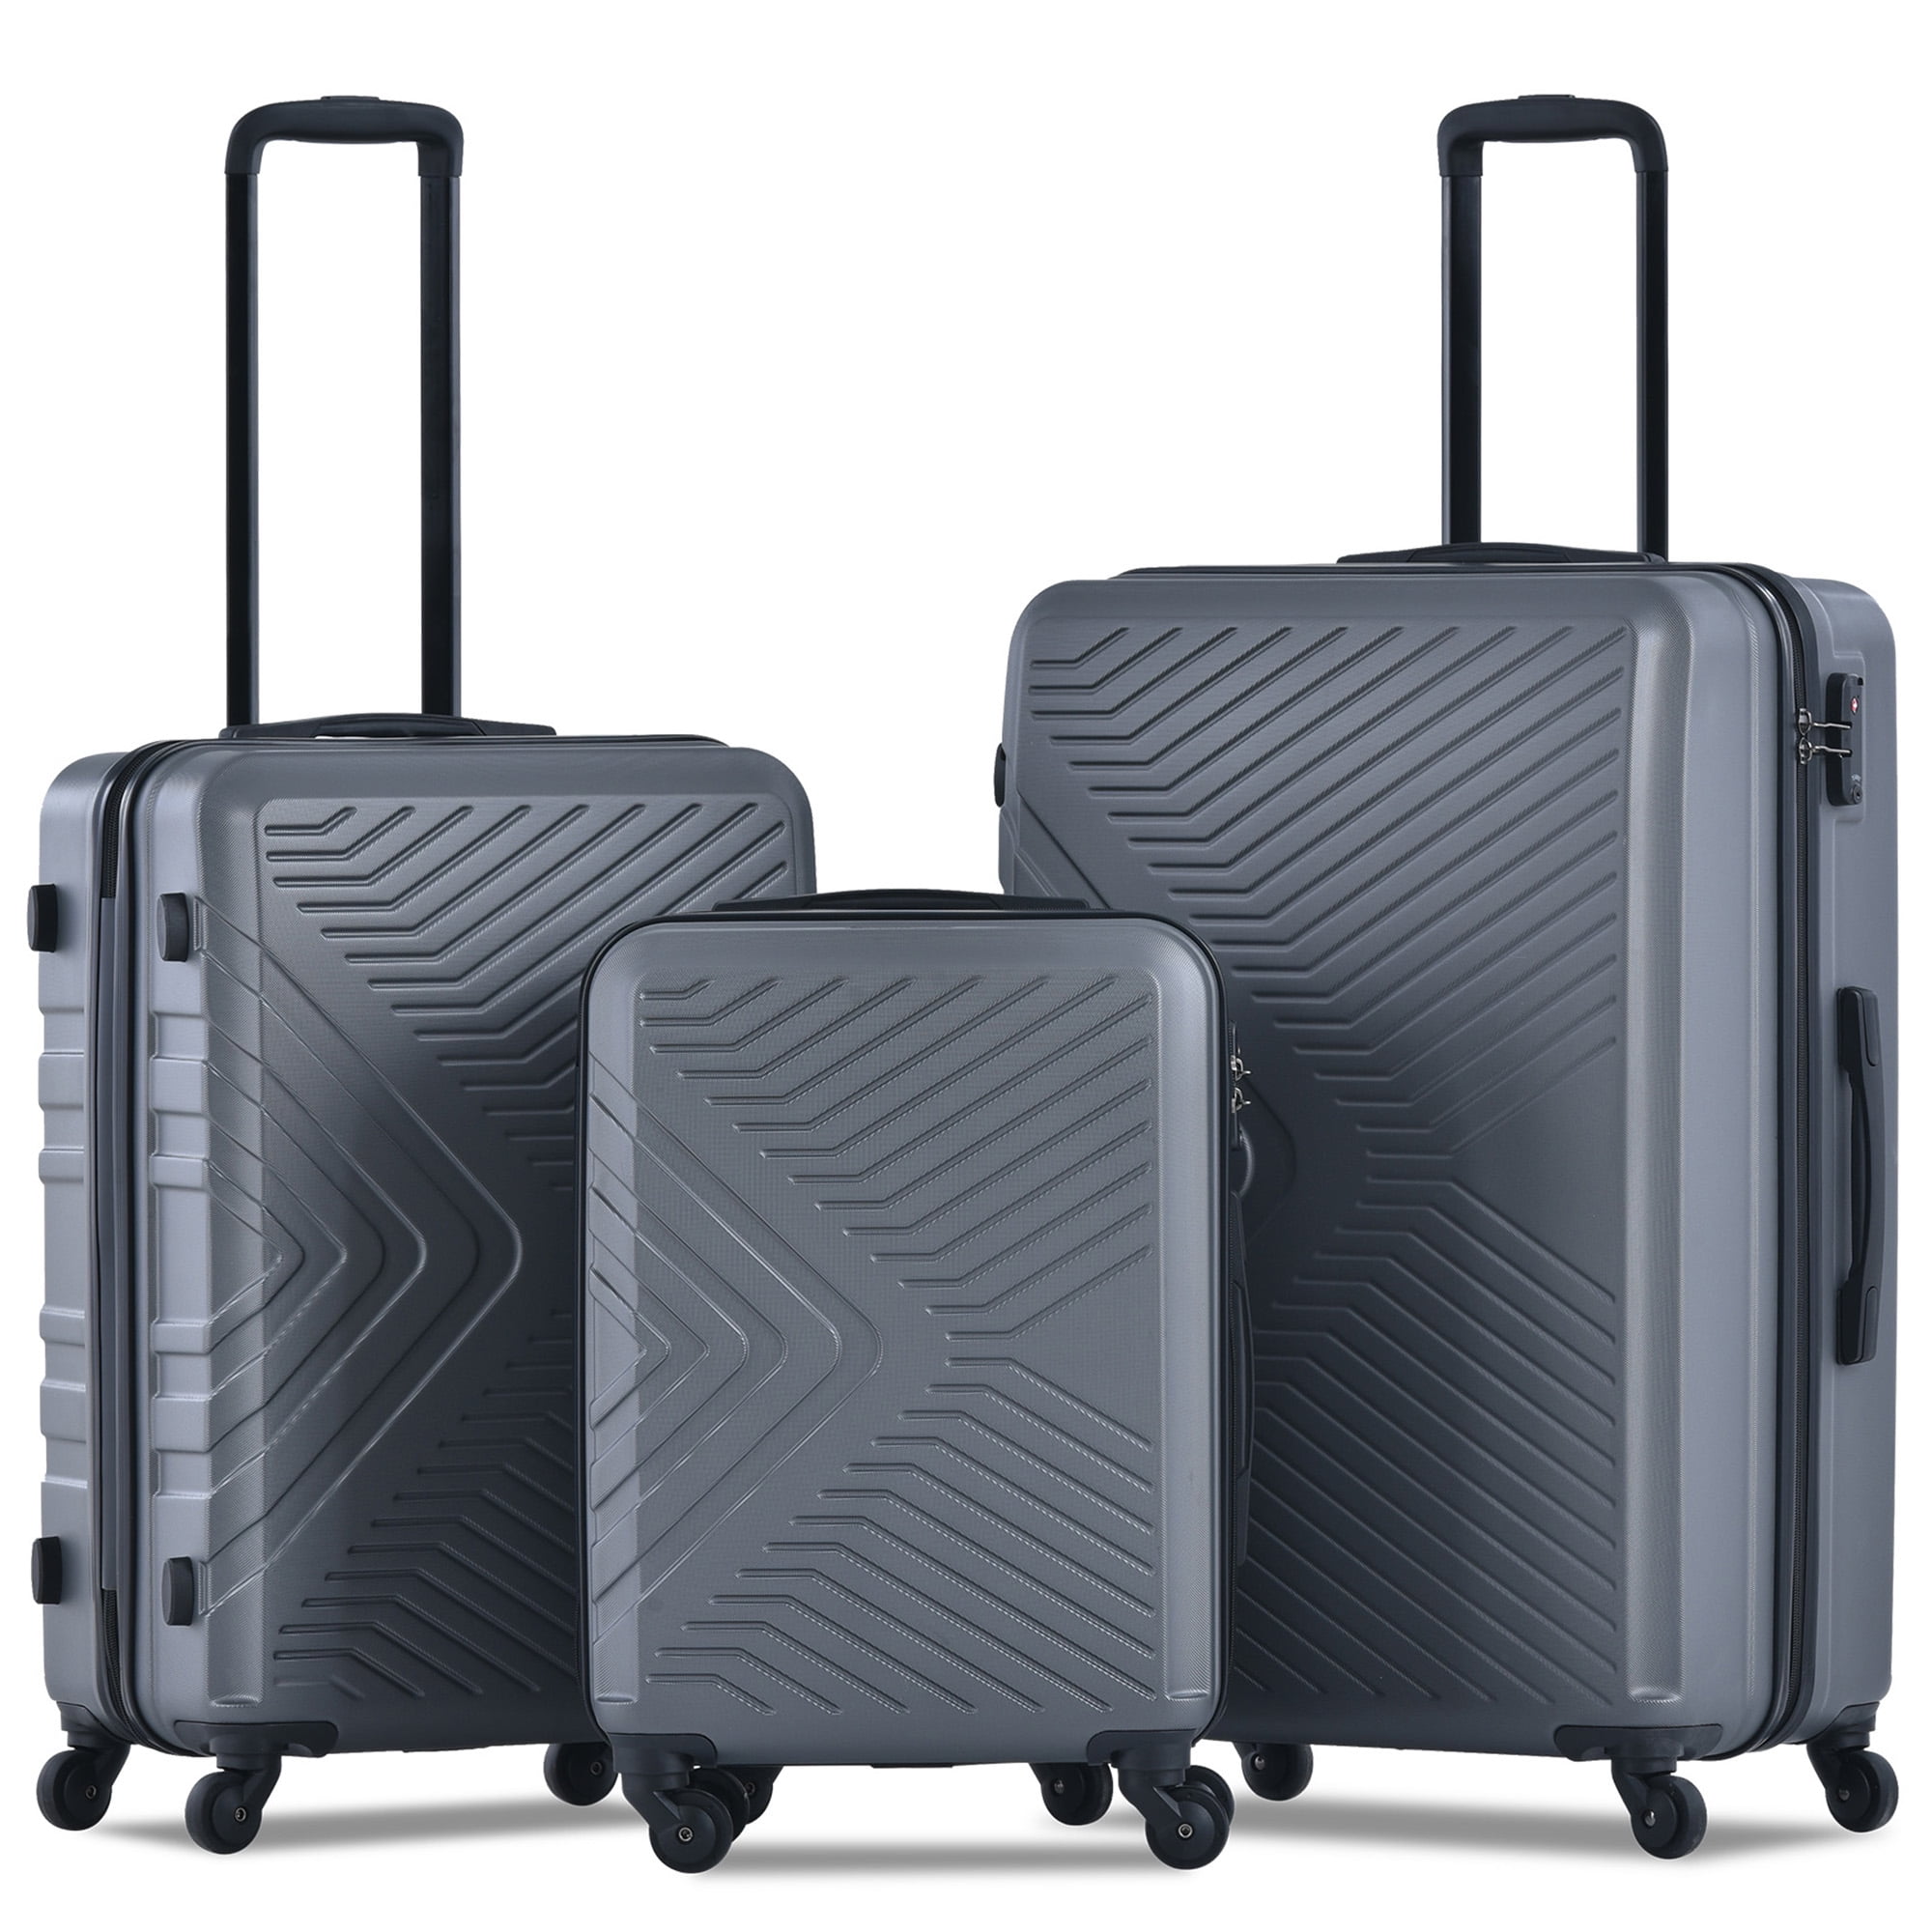 Flieks Luggage Sets 3 Piece Spinner Suitcase Lightweight 20 24 28 inch Sky.blue 